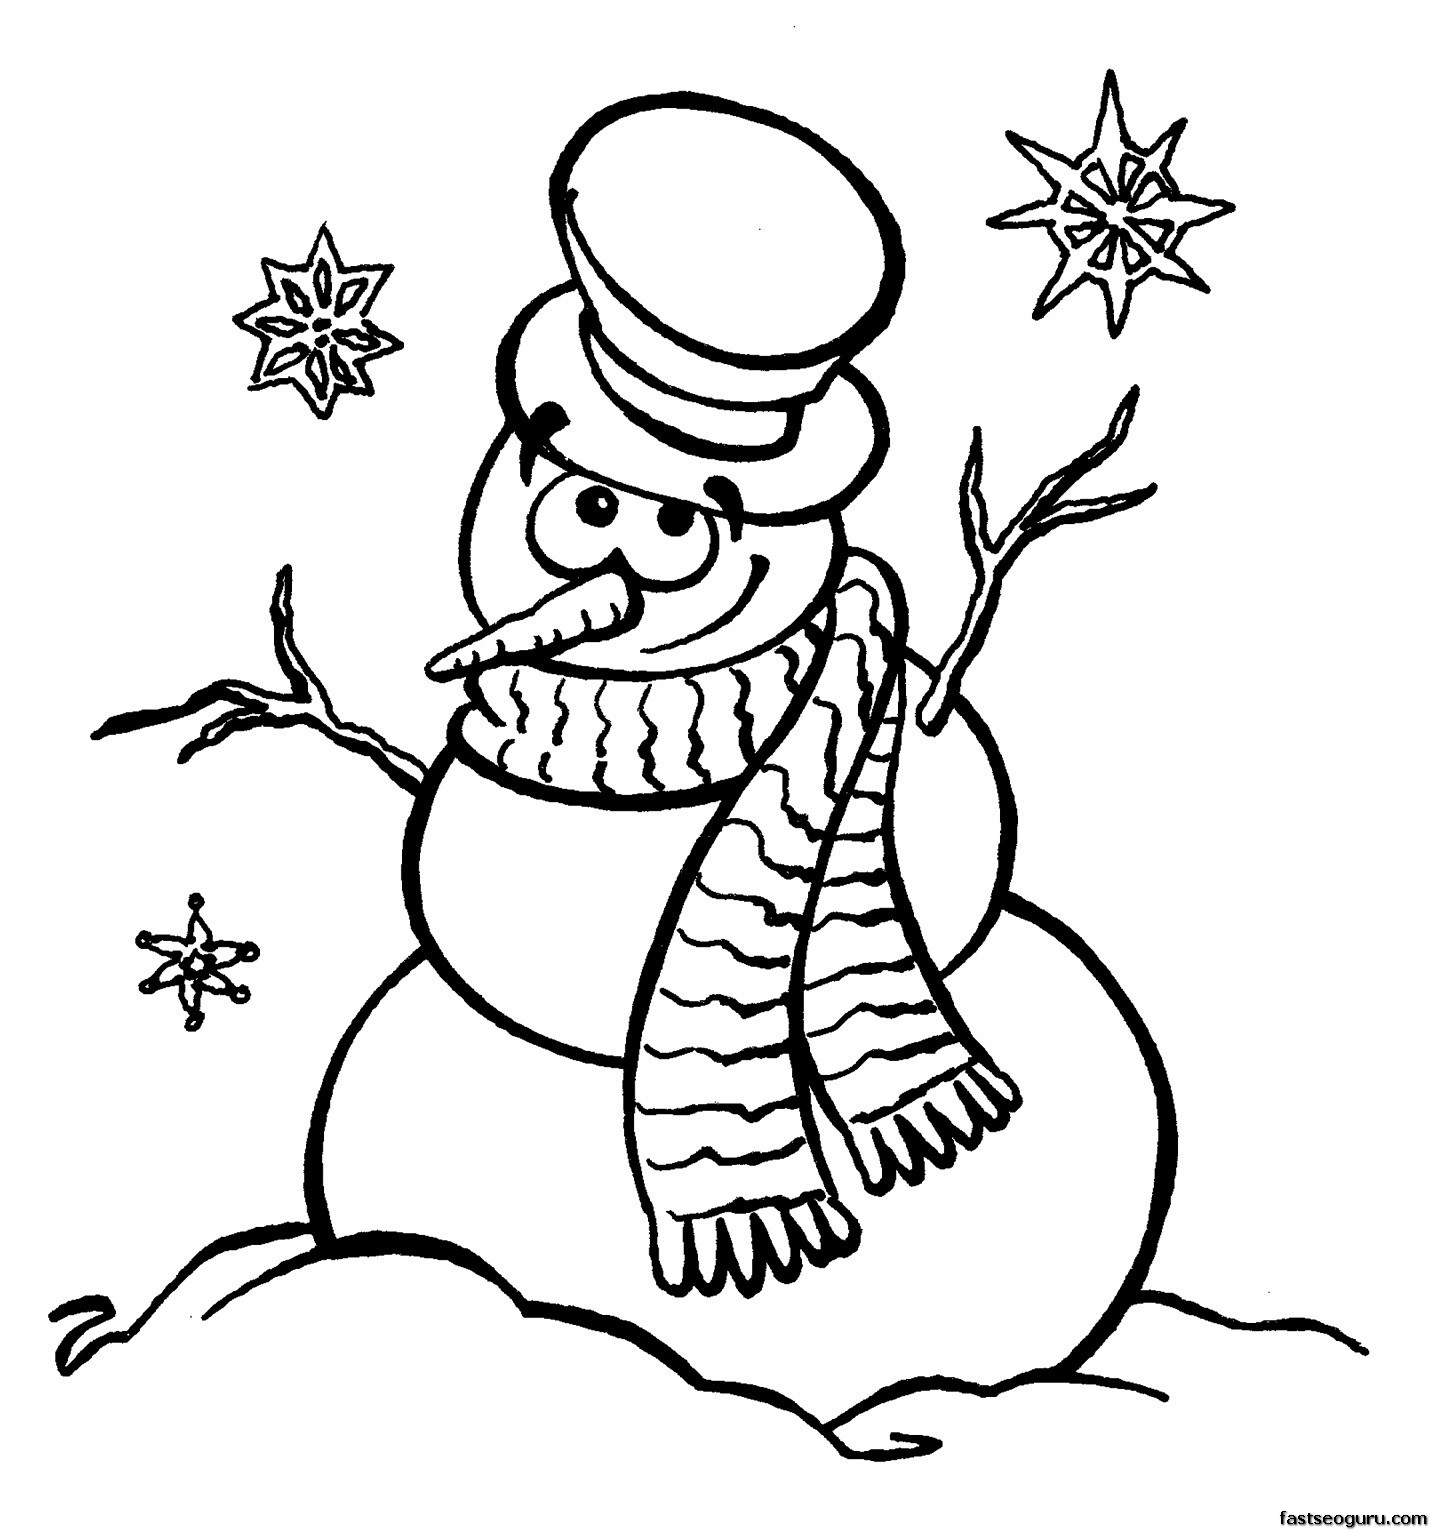 Printable coloring sheet snowman near Christmas - Printable Coloring ...